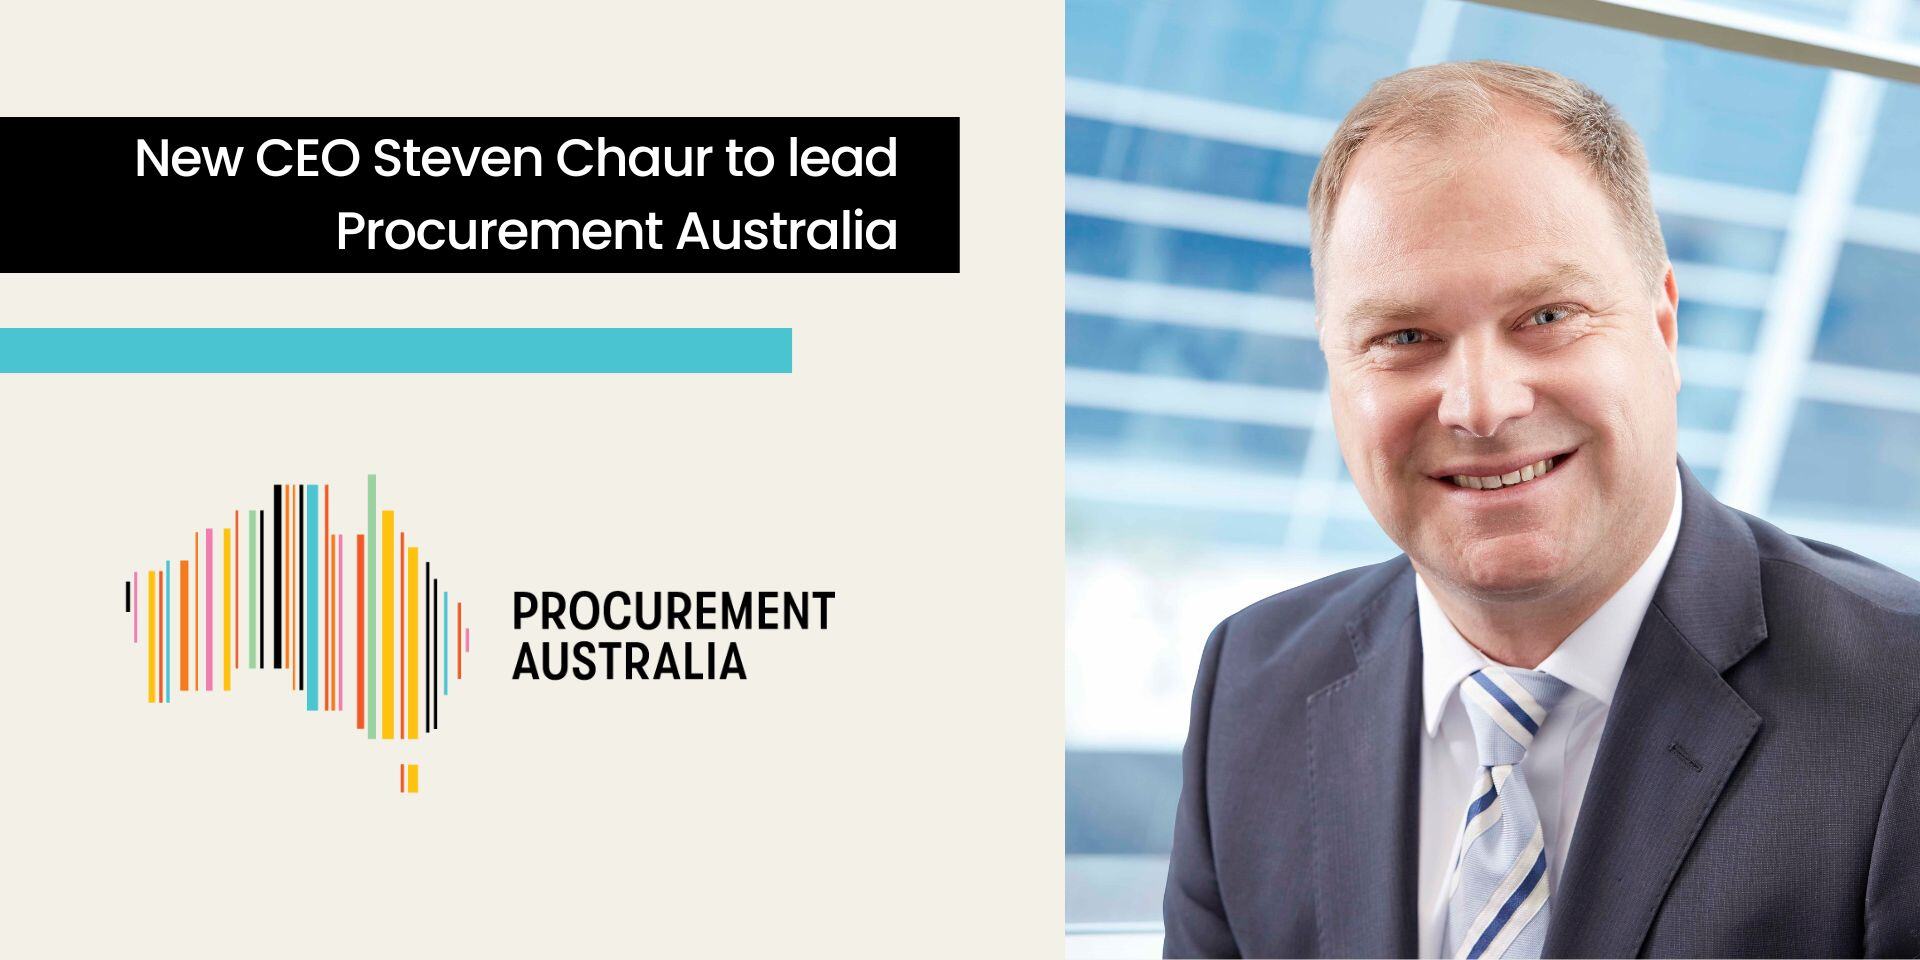 New CEO Steven Chaur to lead Procurement Australia